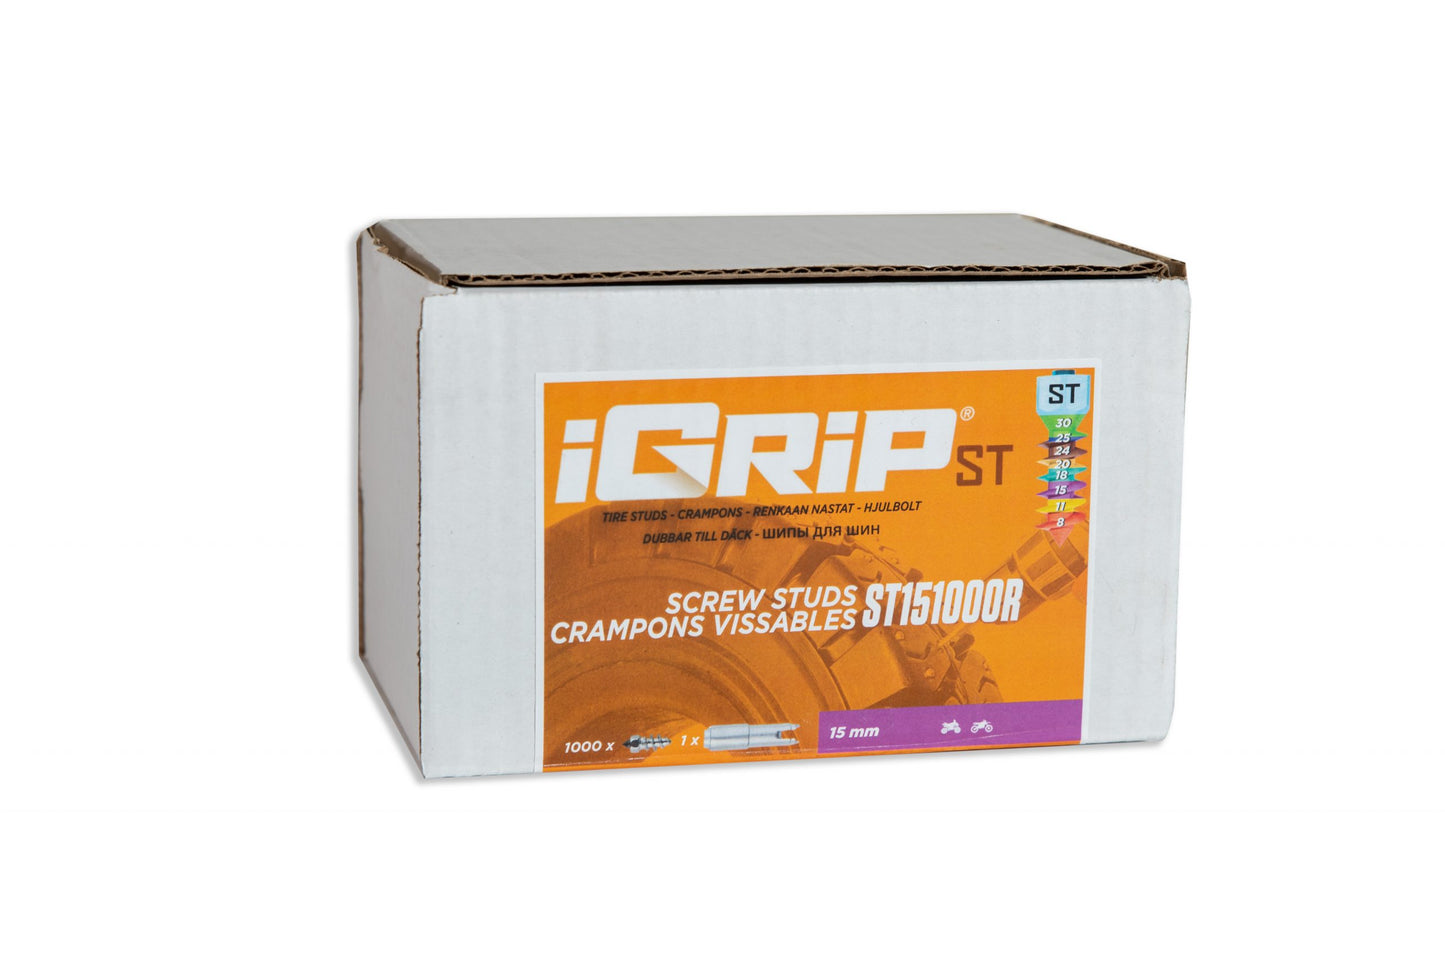 Crampons de course iGrip standard ST-15R